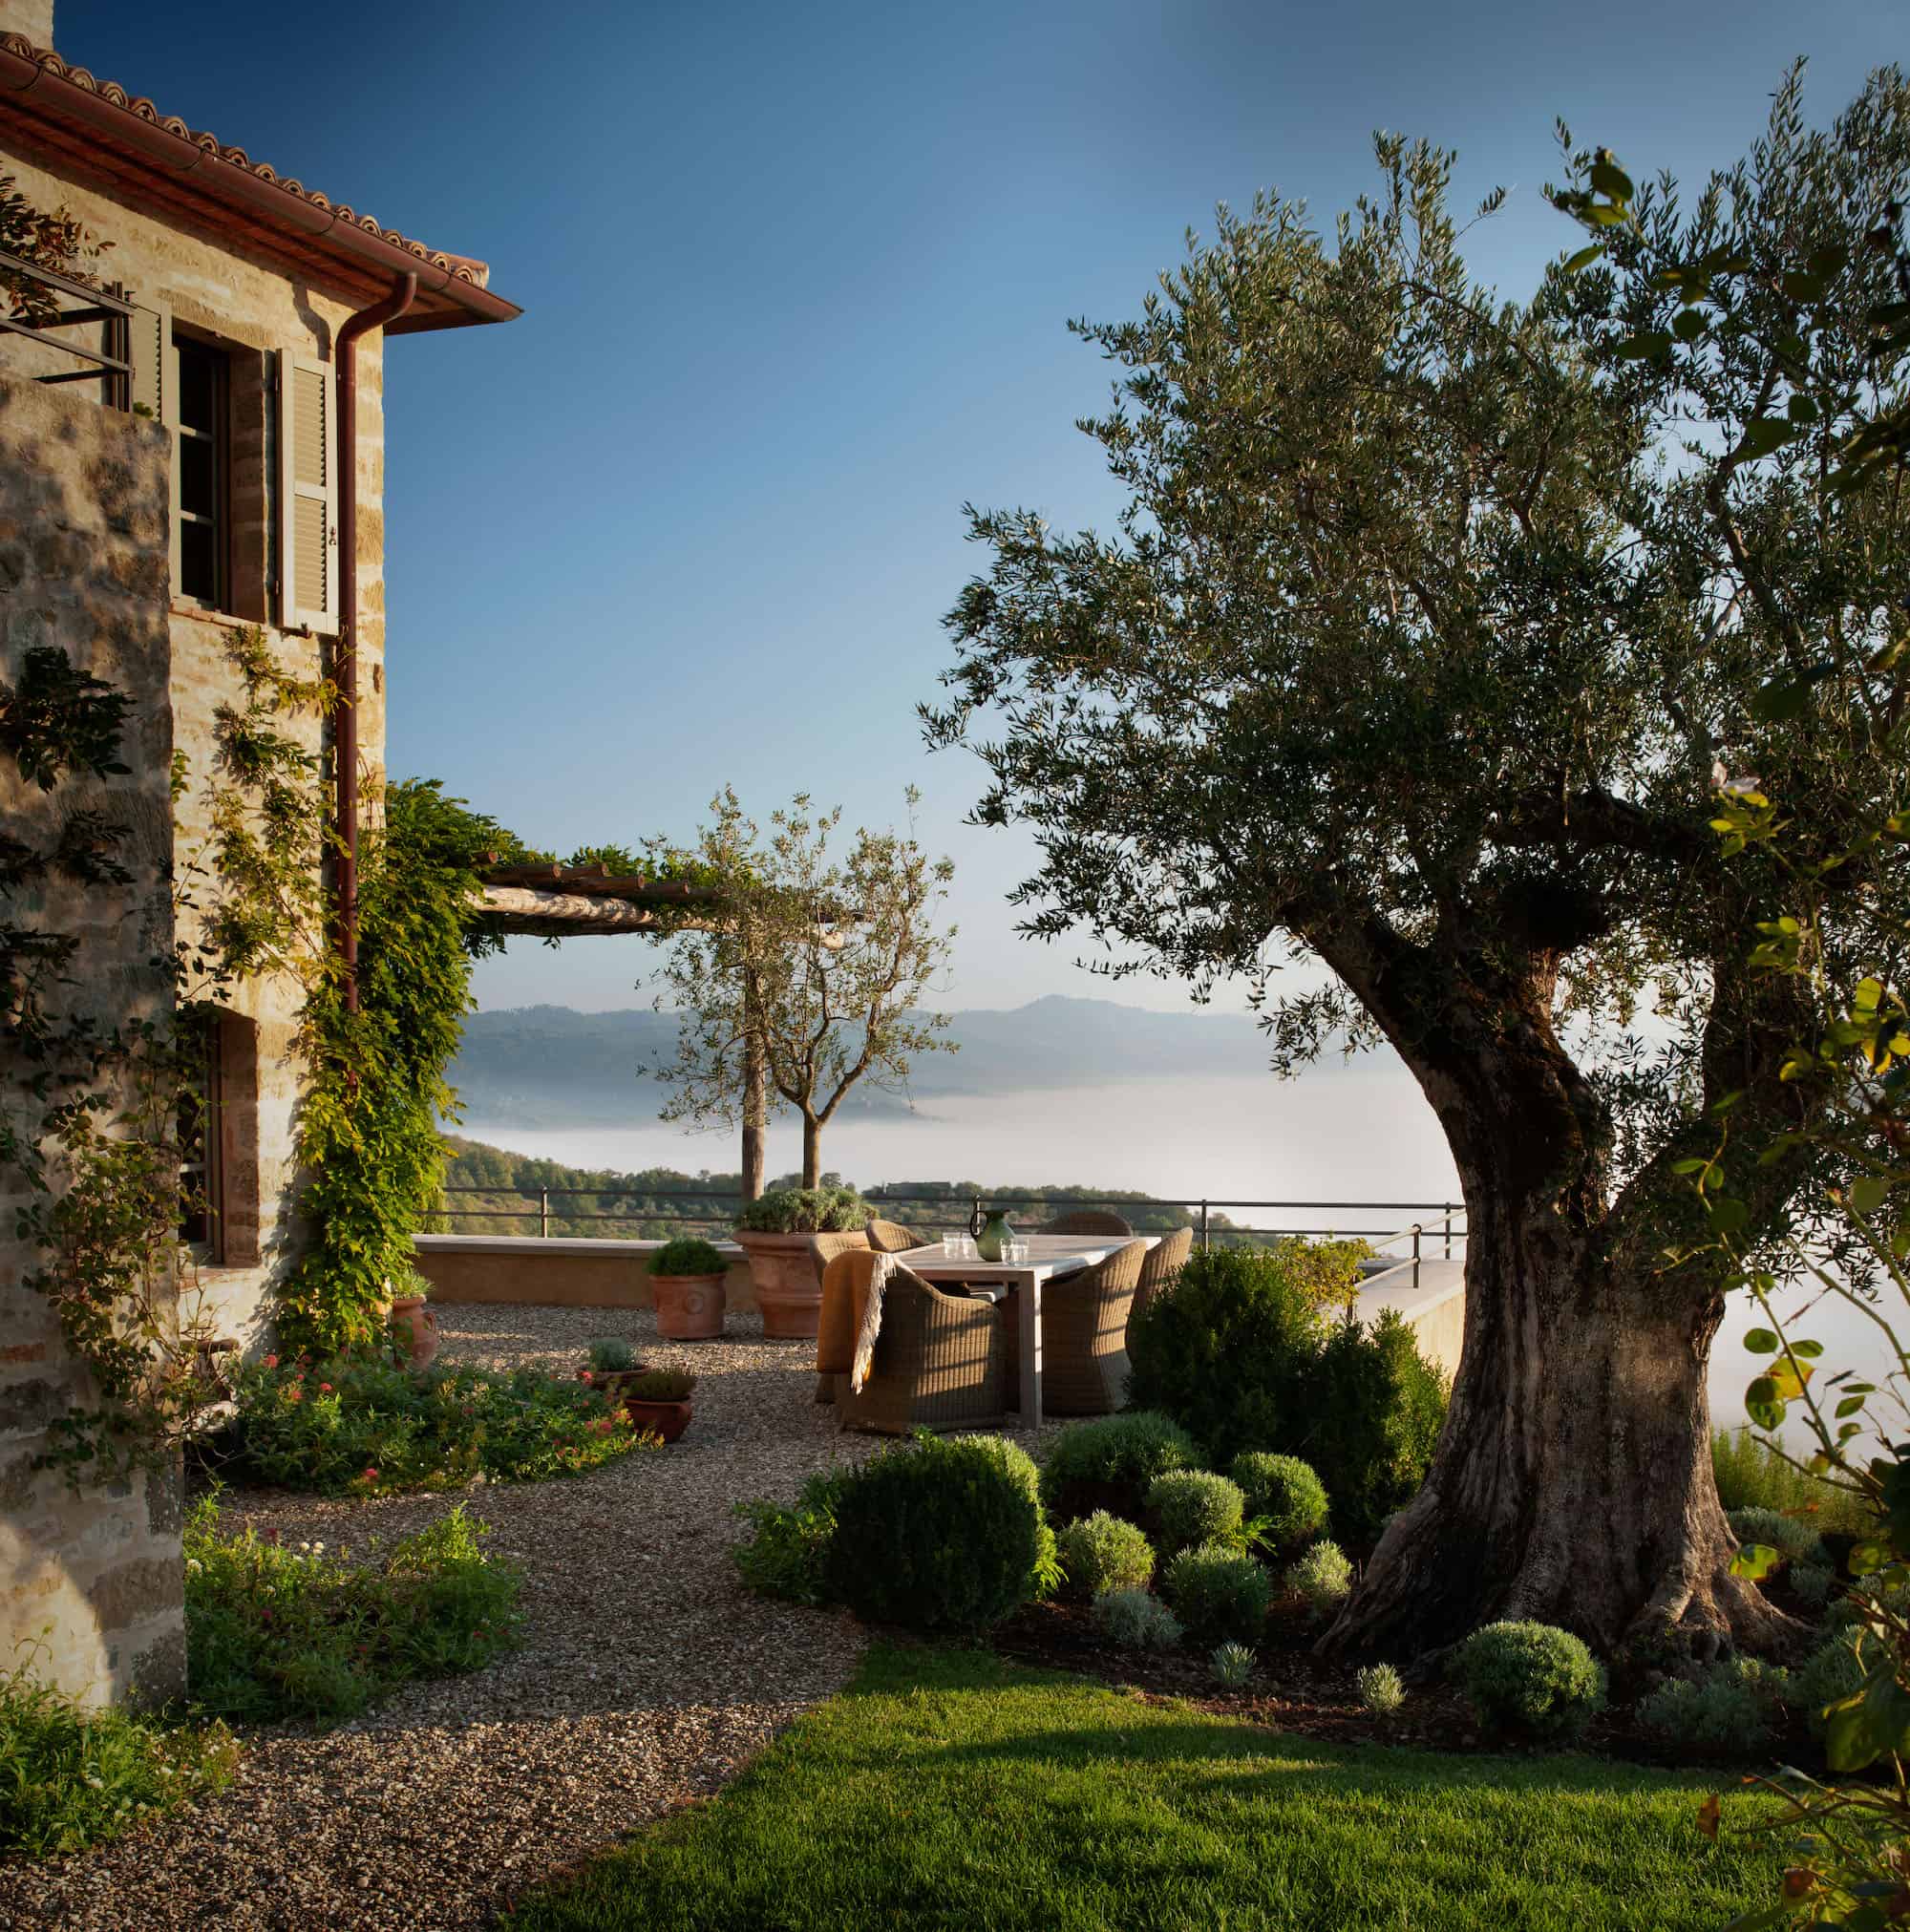 Italy - Umbria - Home in Italy - reschio-bellaria-luxury-vacation-rental-umbria-tuscany-border-